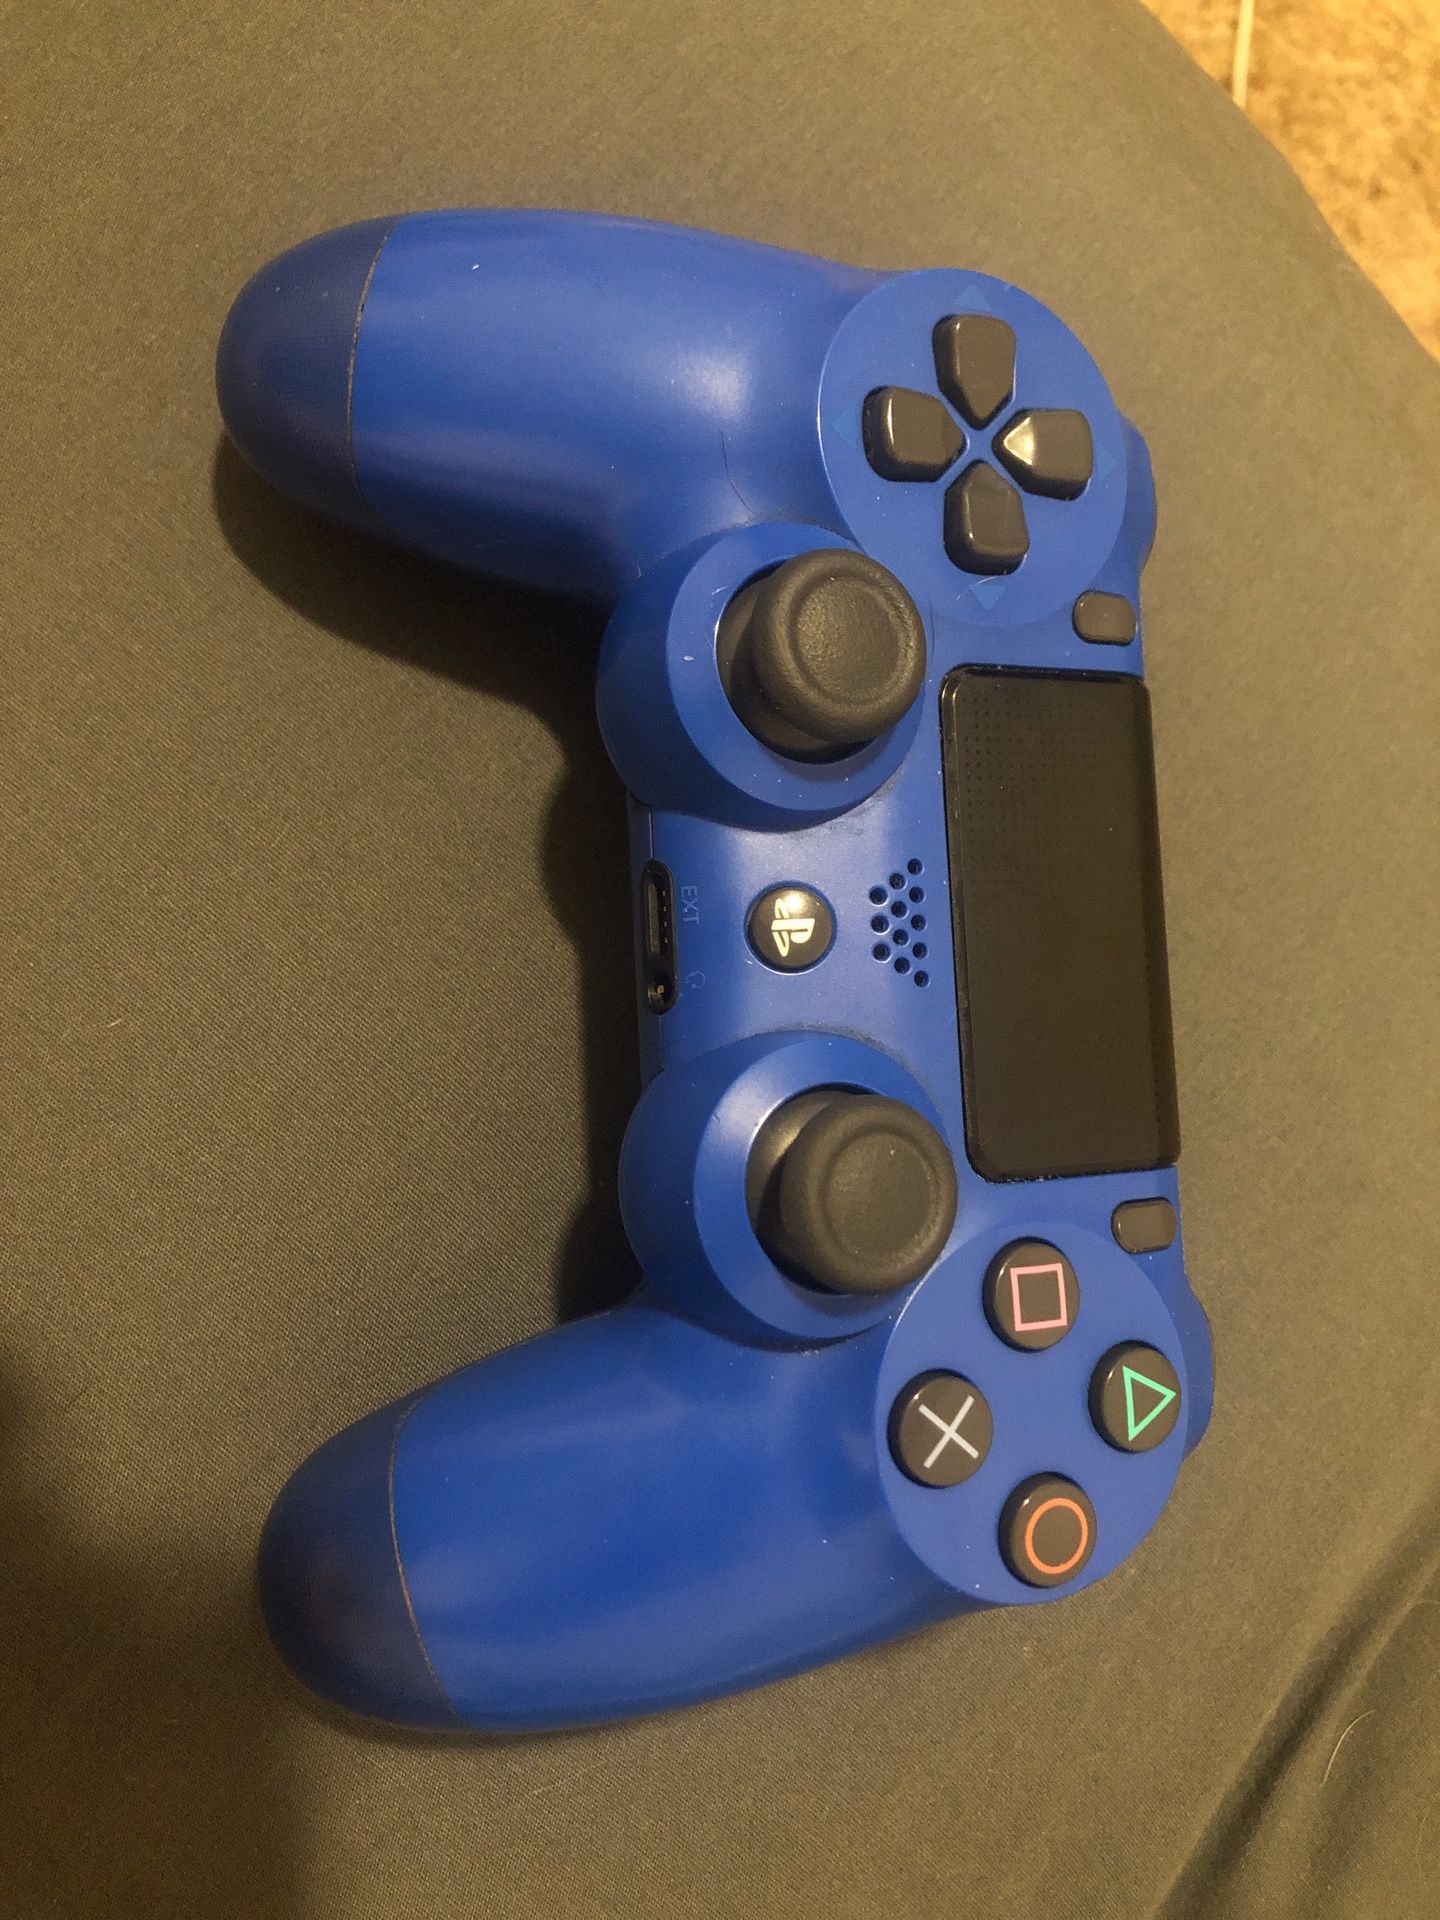 Blue PS4 Controller